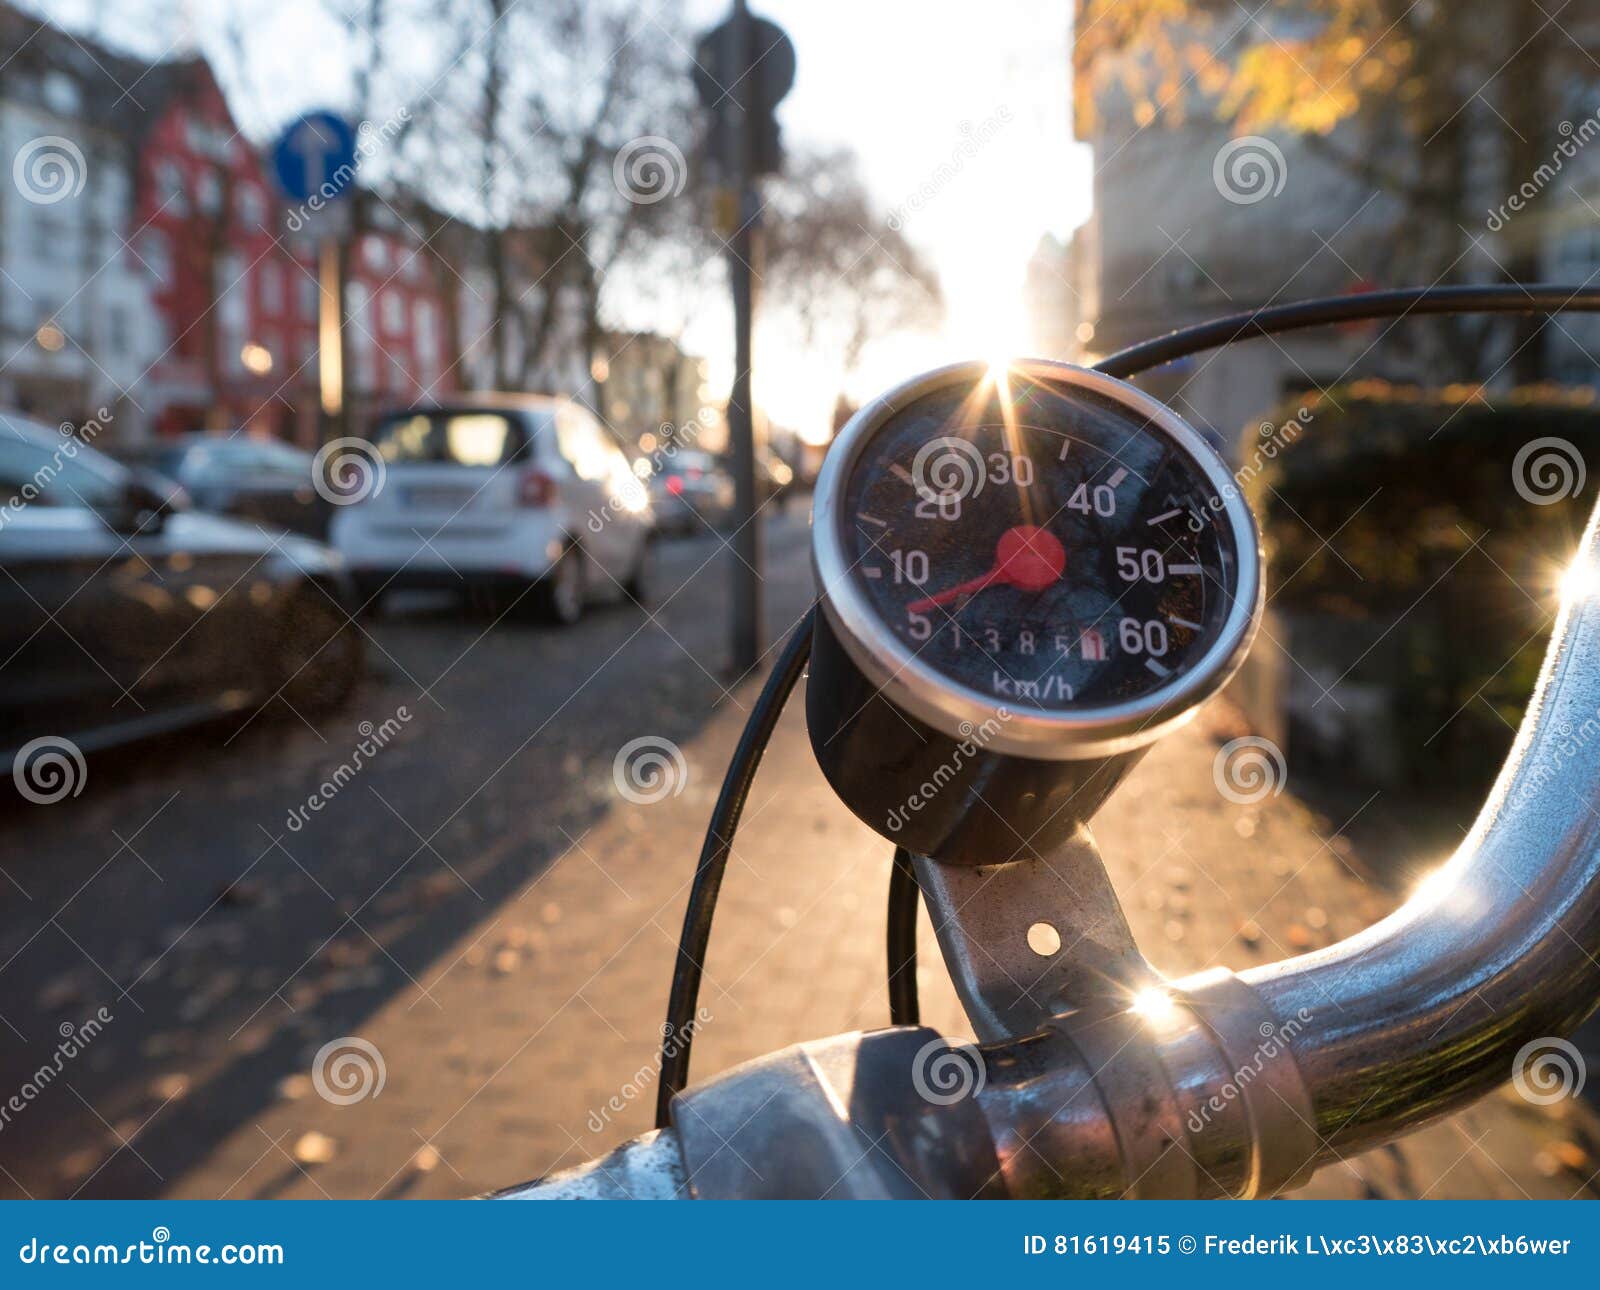 retro analog bicycle speedometer